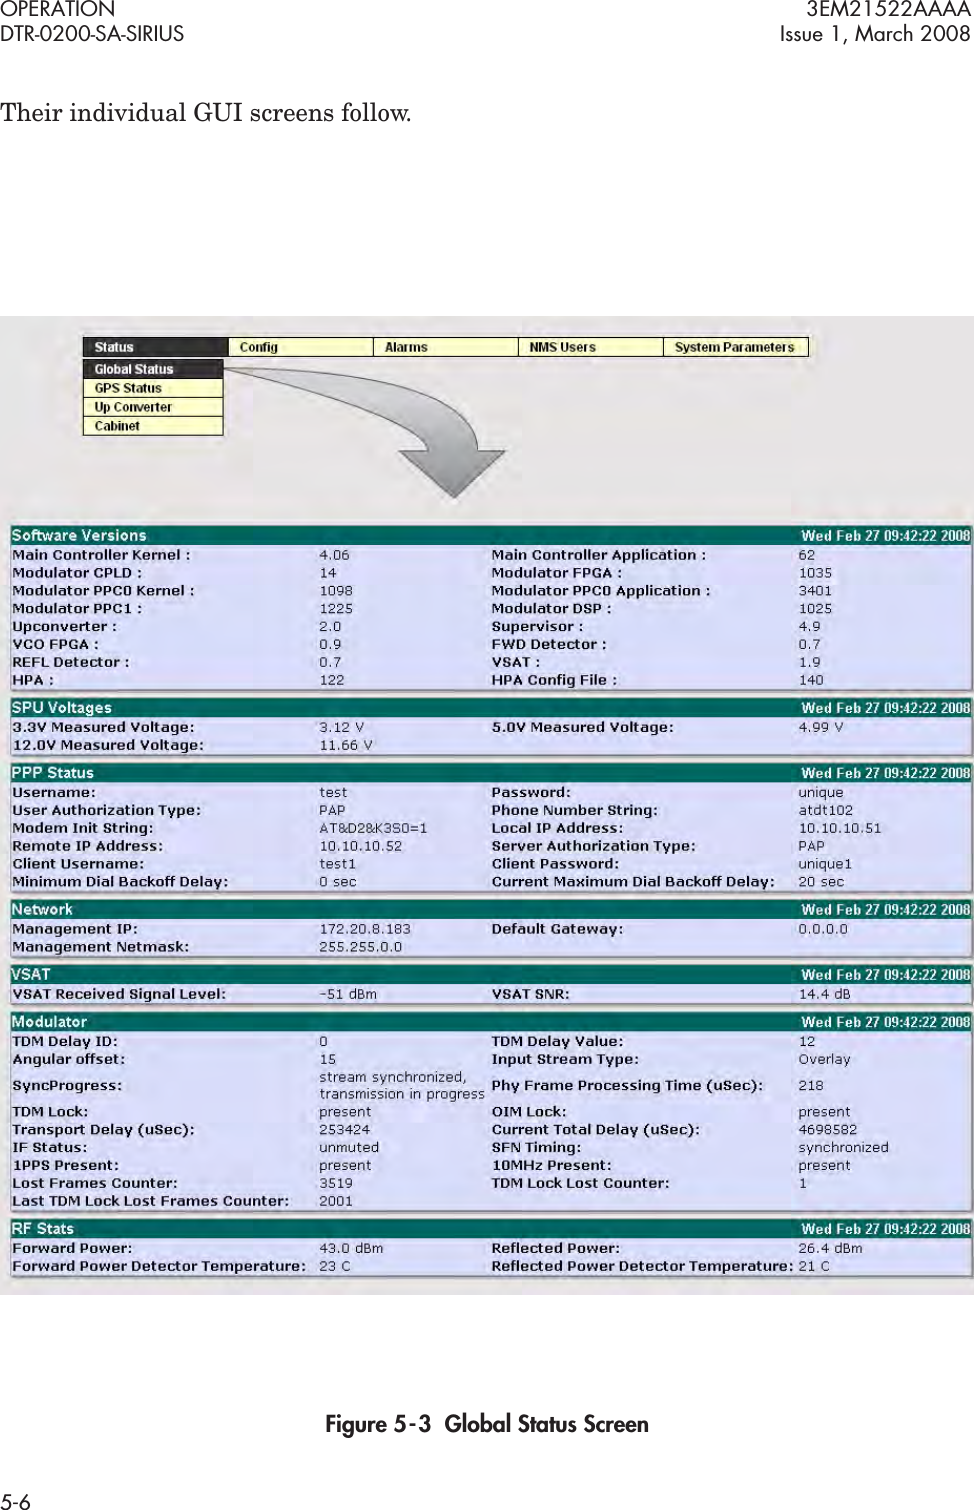 OPERATION 3EM21522AAAADTR-0200-SA-SIRIUS Issue 1, March 20085-6Their individual GUI screens follow.Figure 5  -  3  Global Status Screen